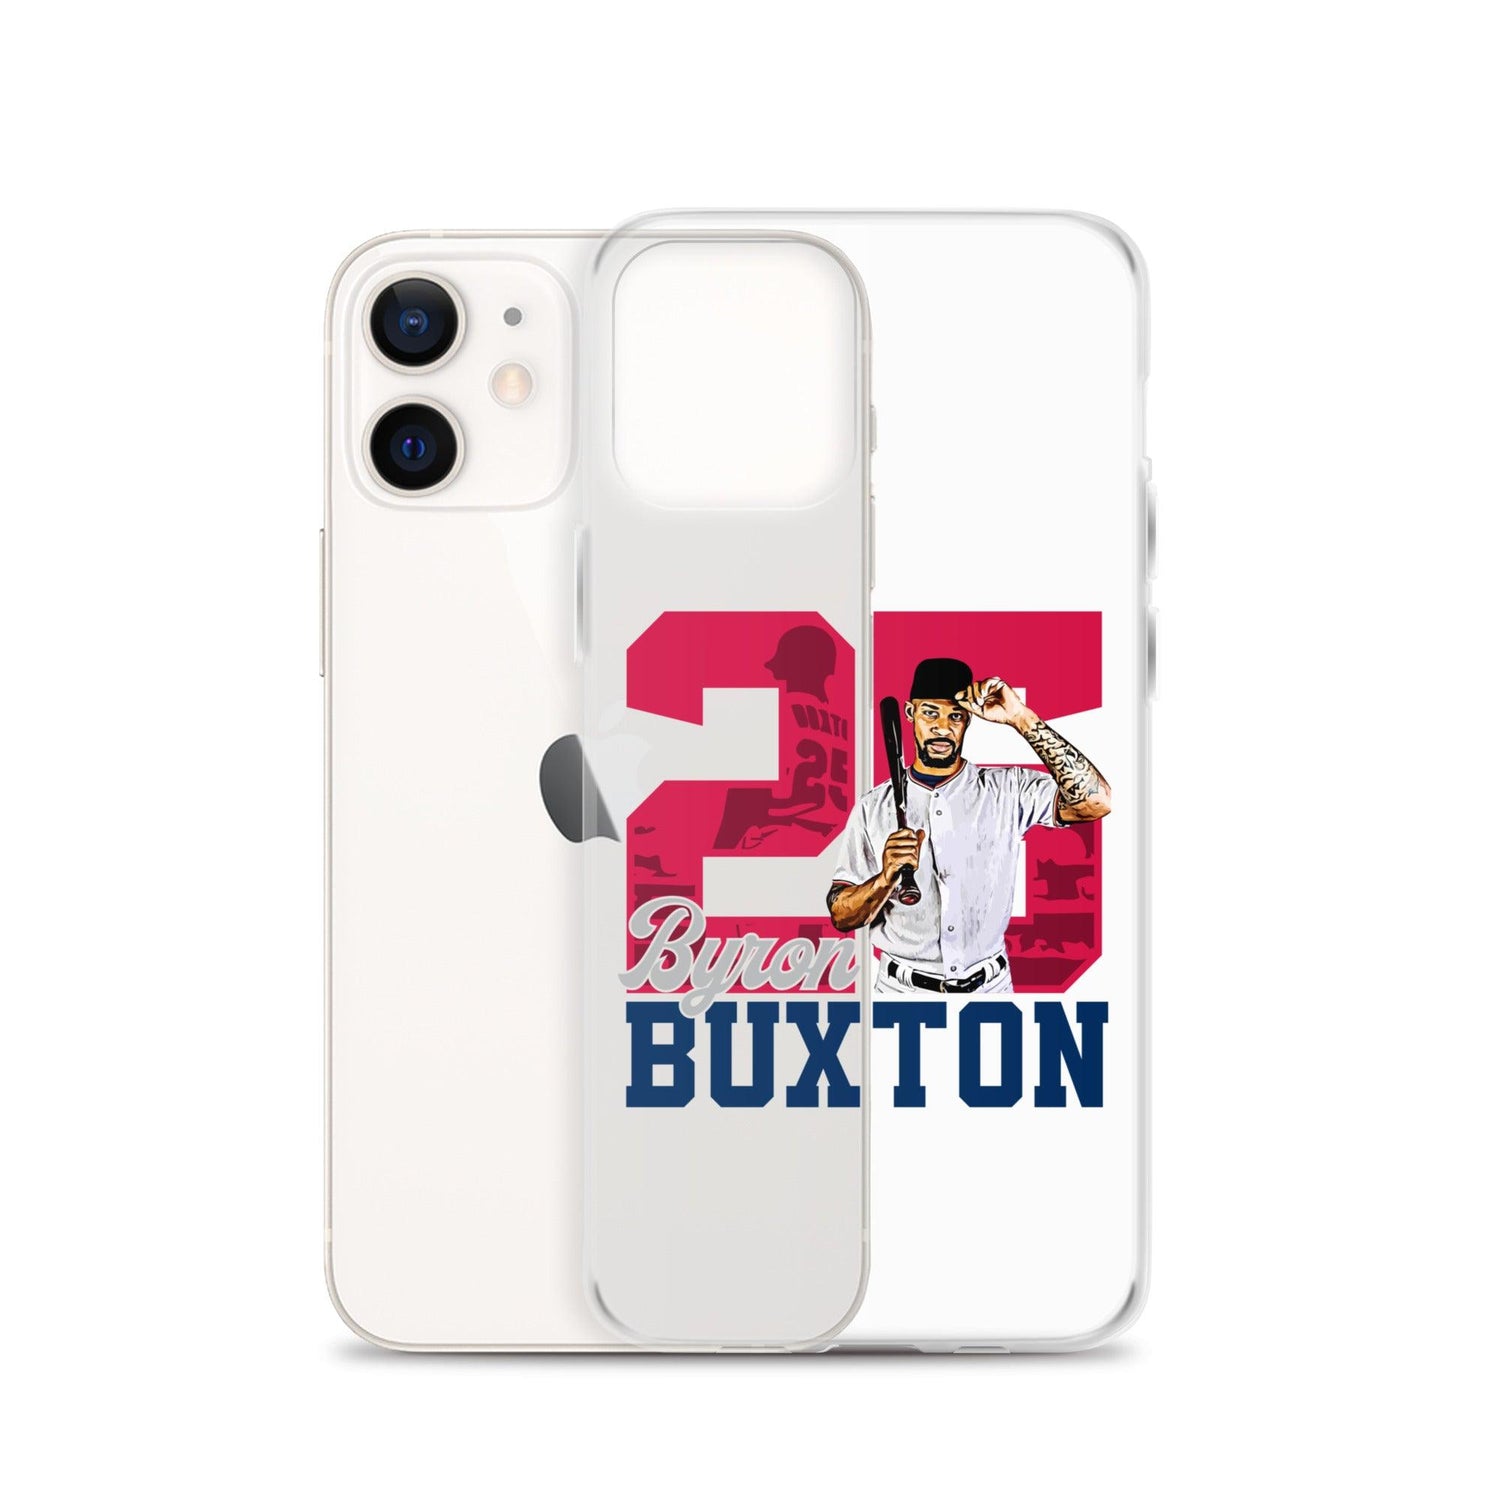 Byron Buxton "Legacy" iPhone Case - Fan Arch